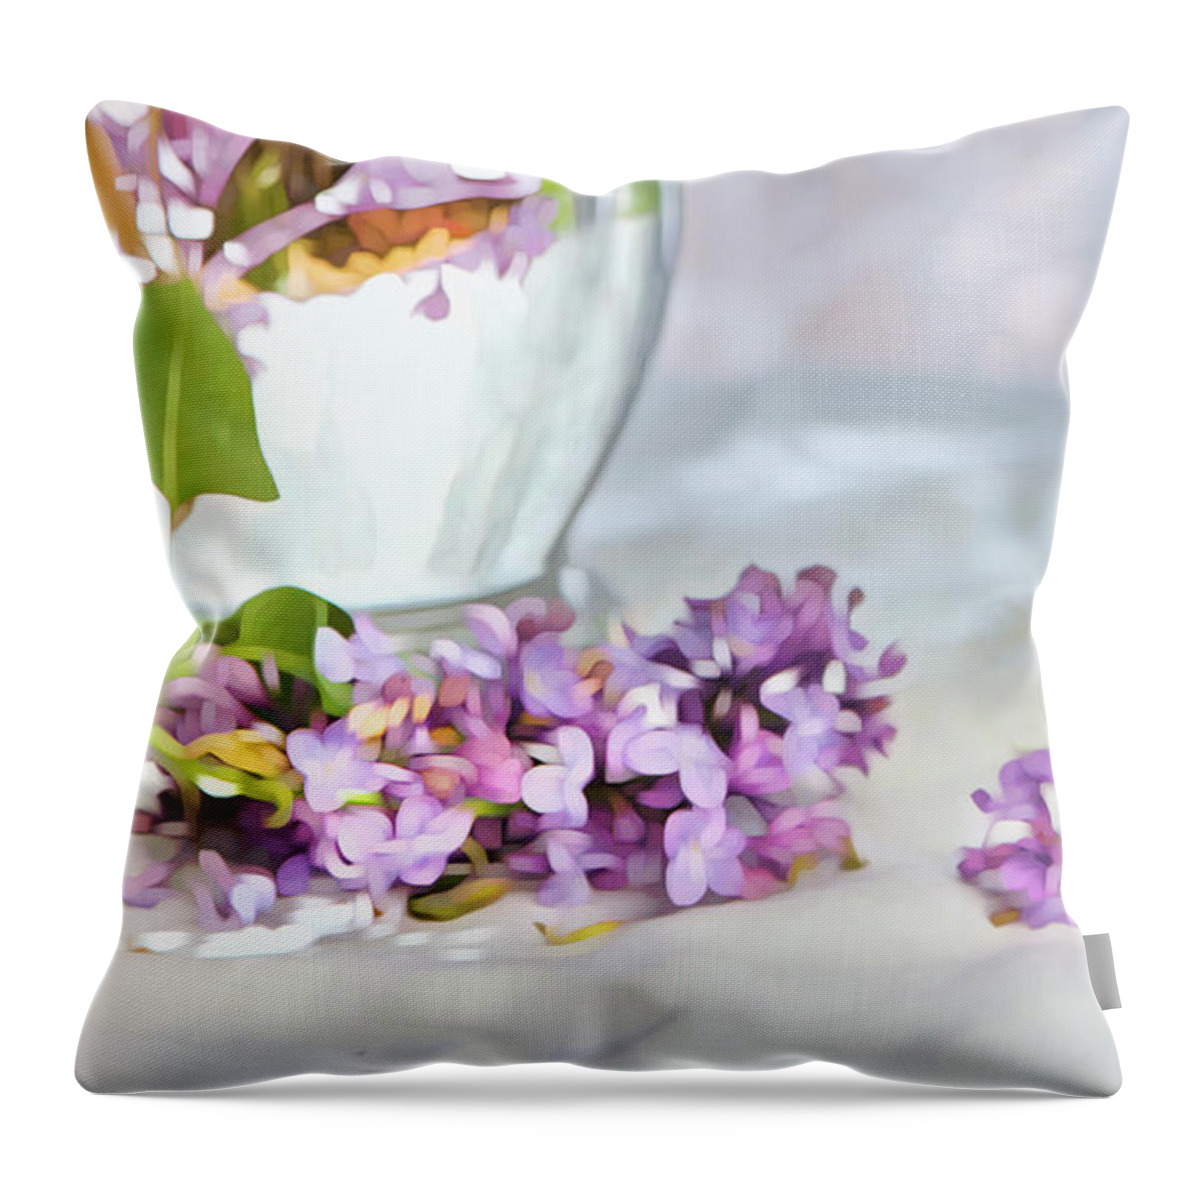 Theresa Tahara Throw Pillow featuring the photograph Still Life With Lilacs by Theresa Tahara